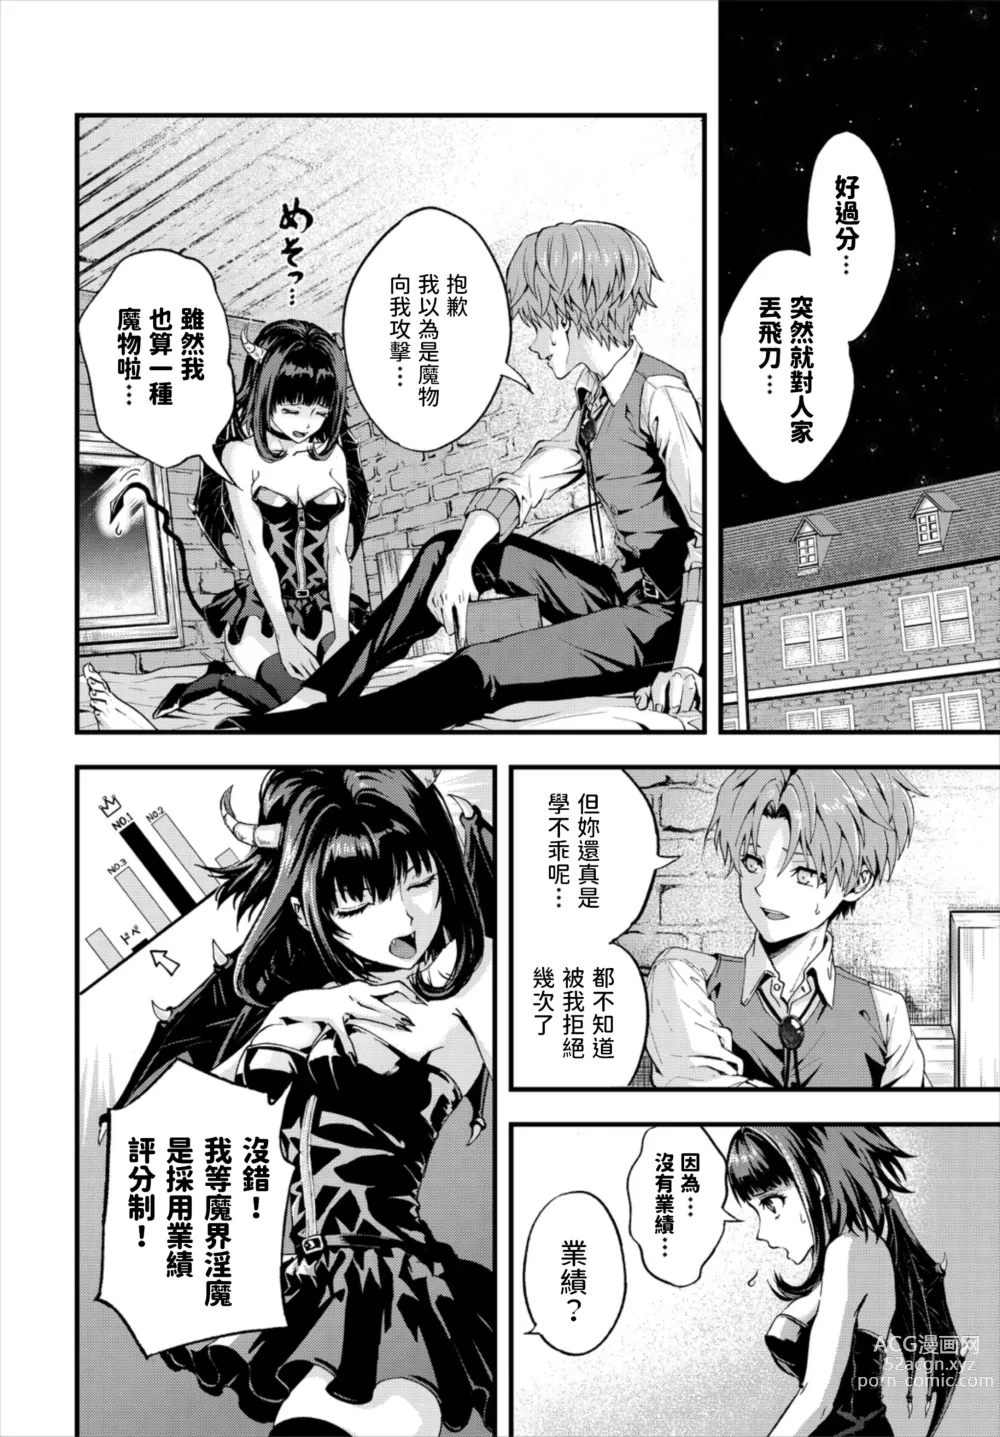 Page 2 of manga Motto Ijimete!